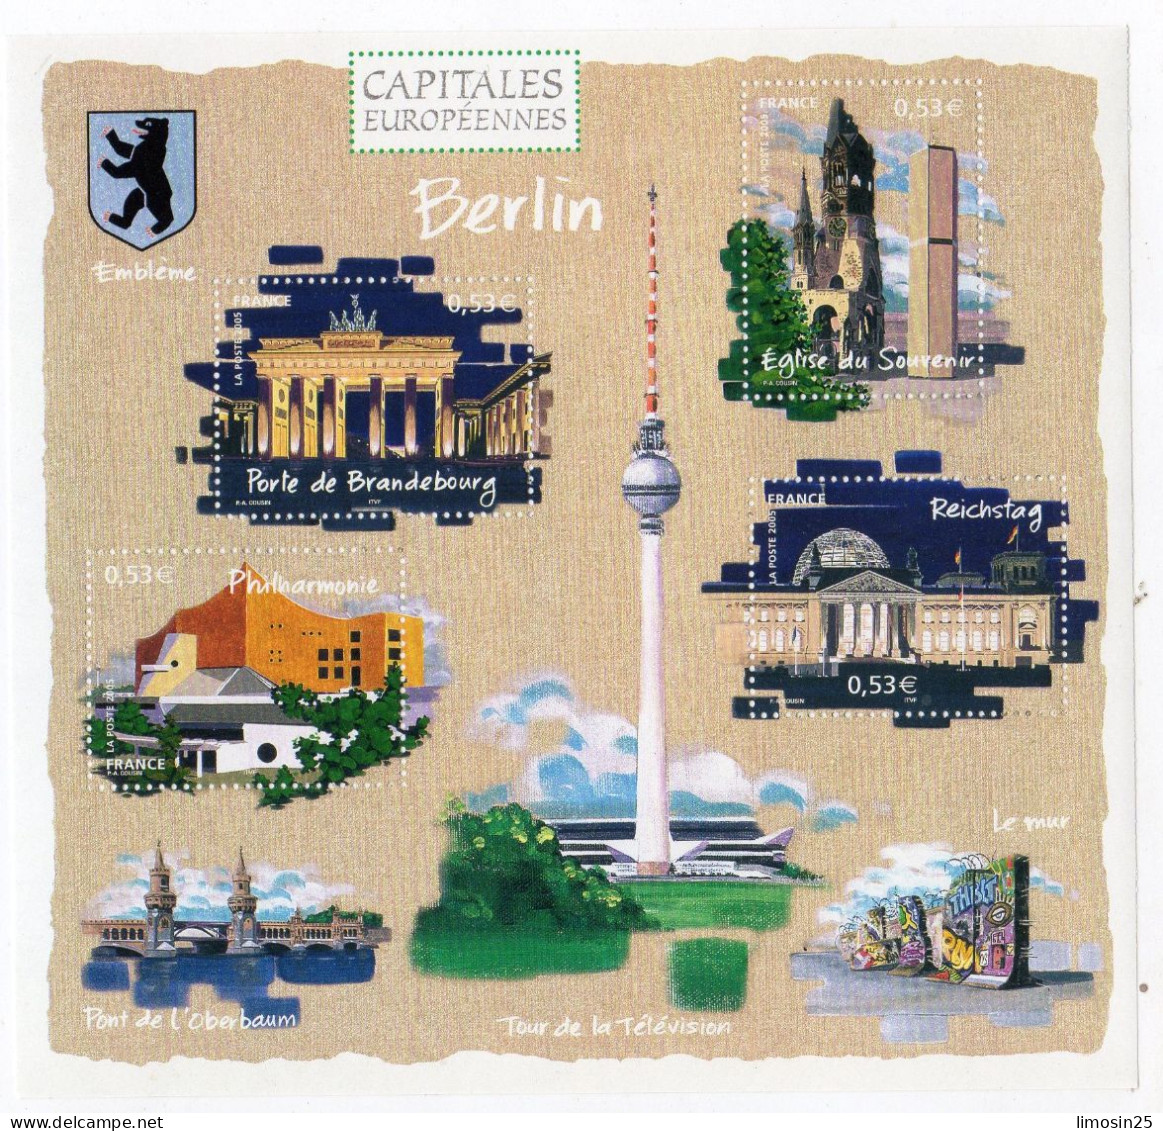 CAPITALES EUROPEENNES - Berlin - 2005 - Nuevos